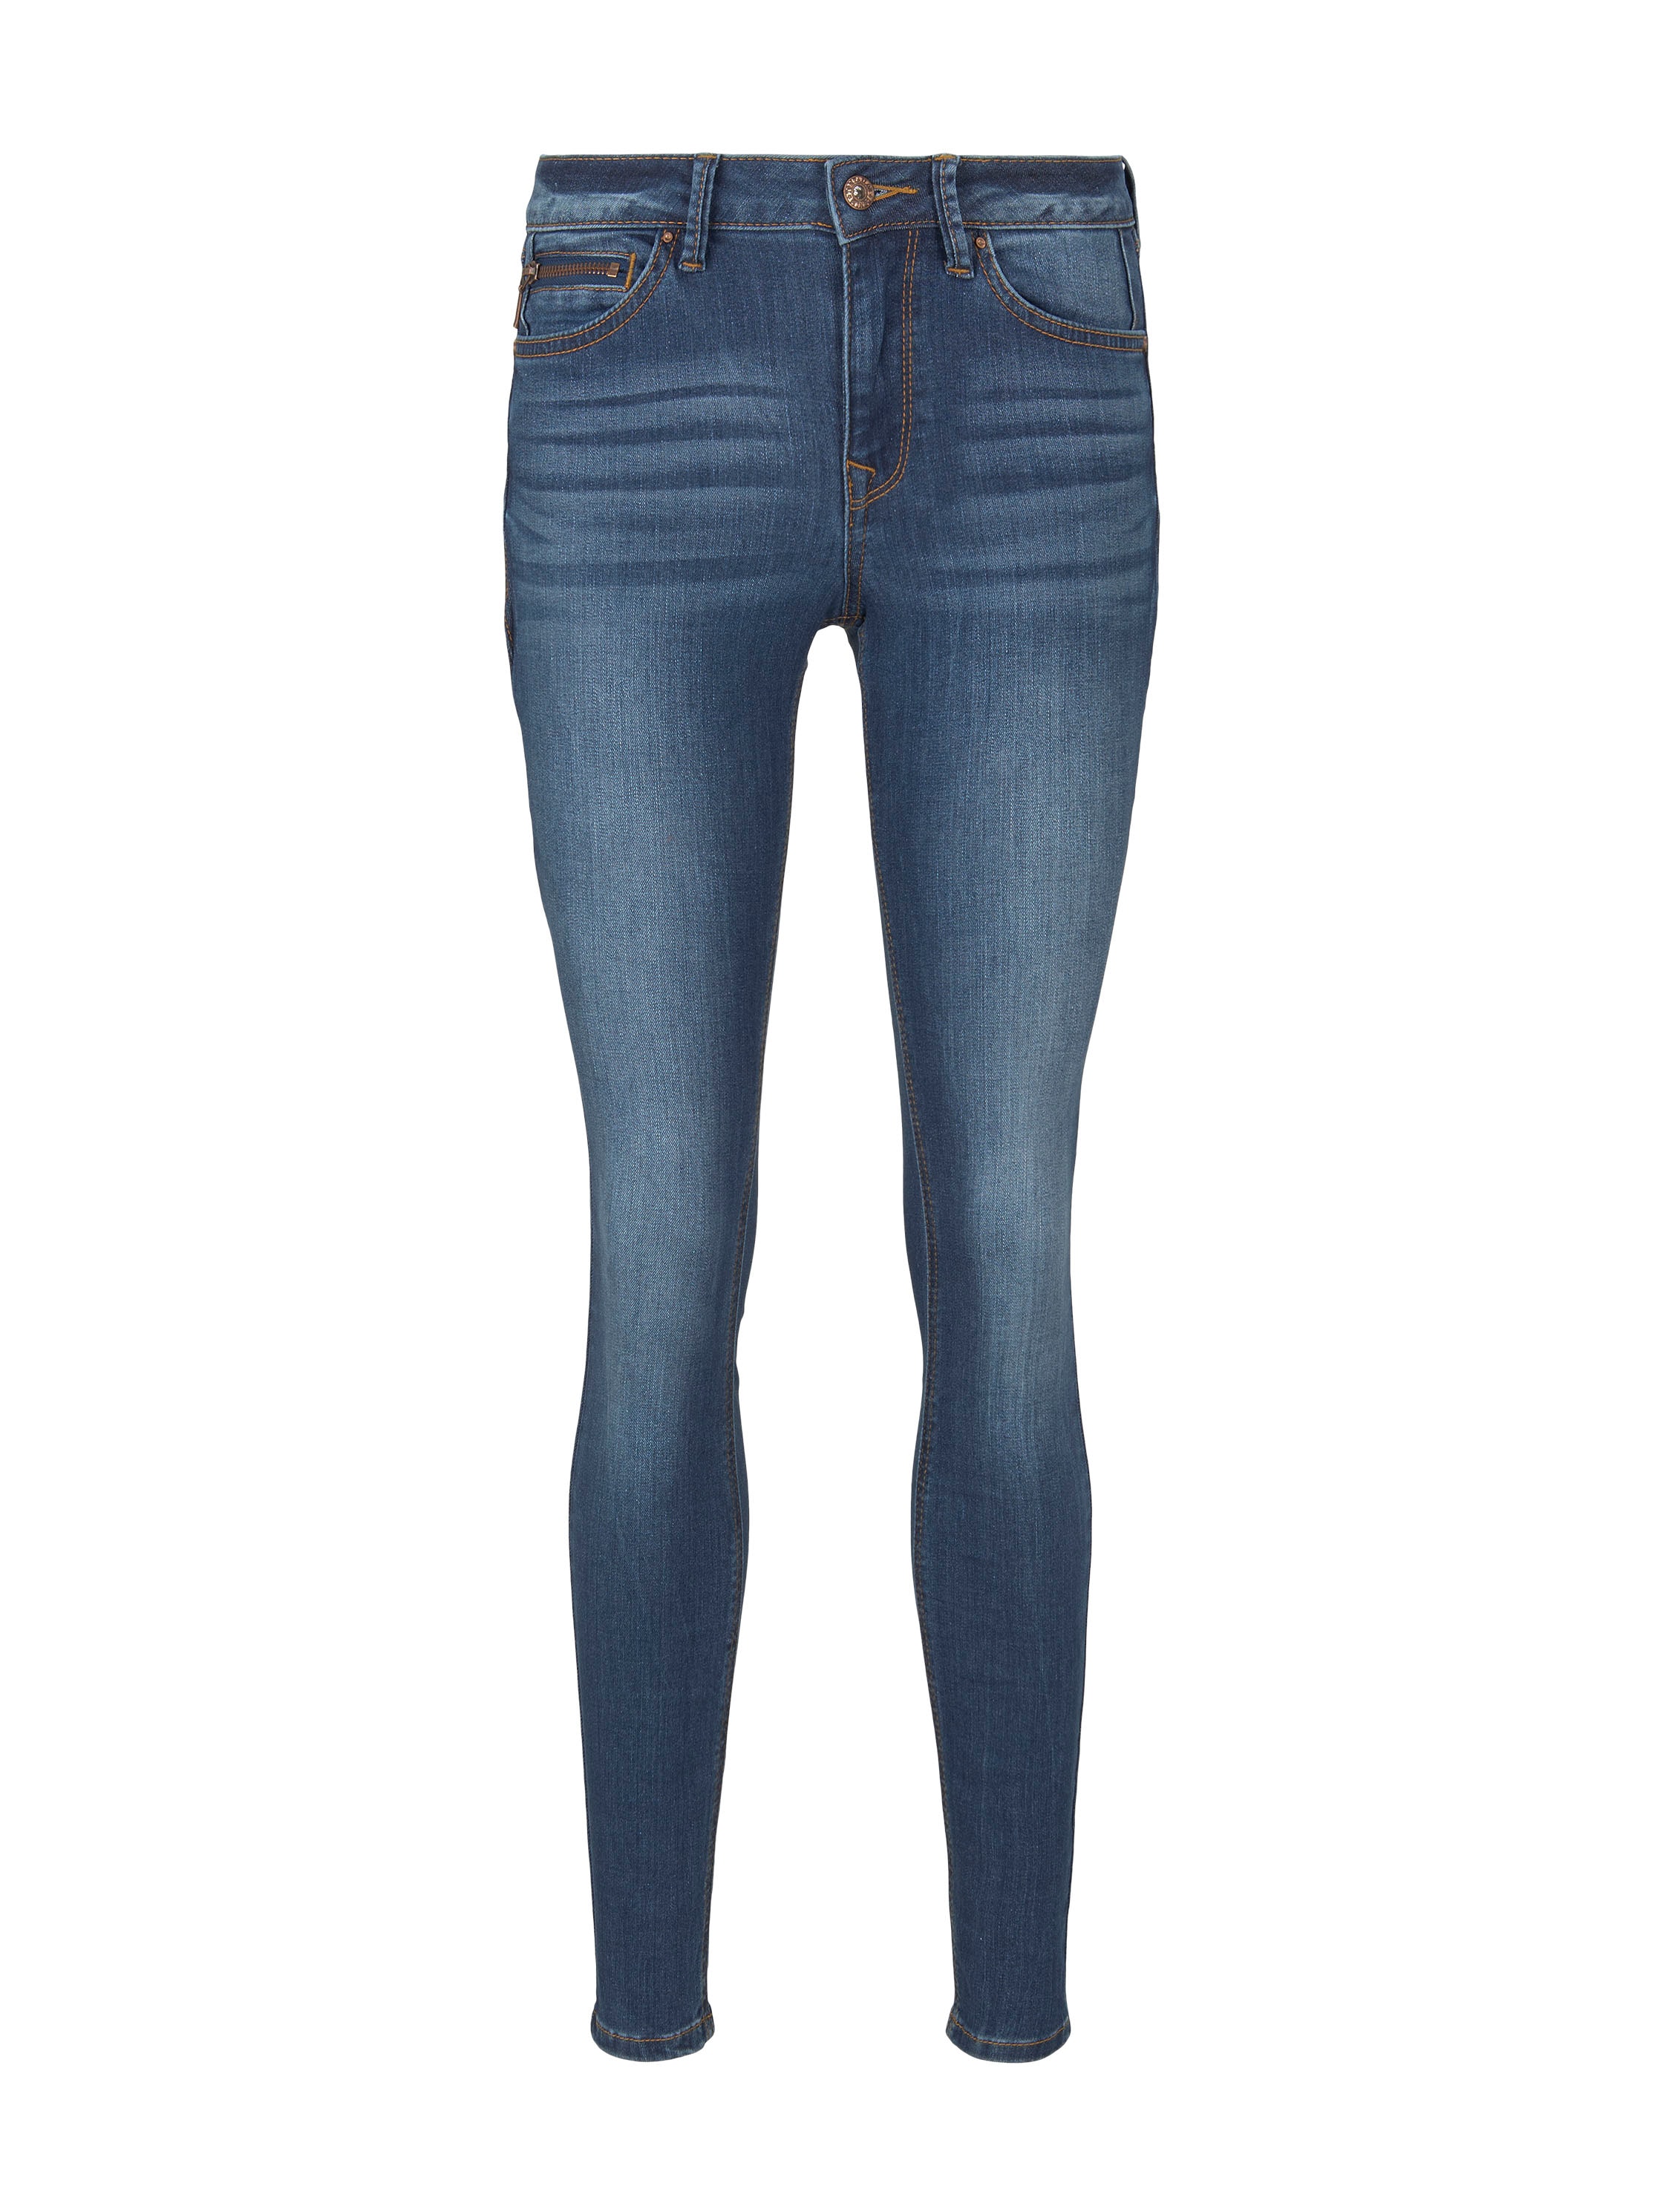 TOM TAILOR OTTO Skinny-fit-Jeans »JONA« online bei Denim